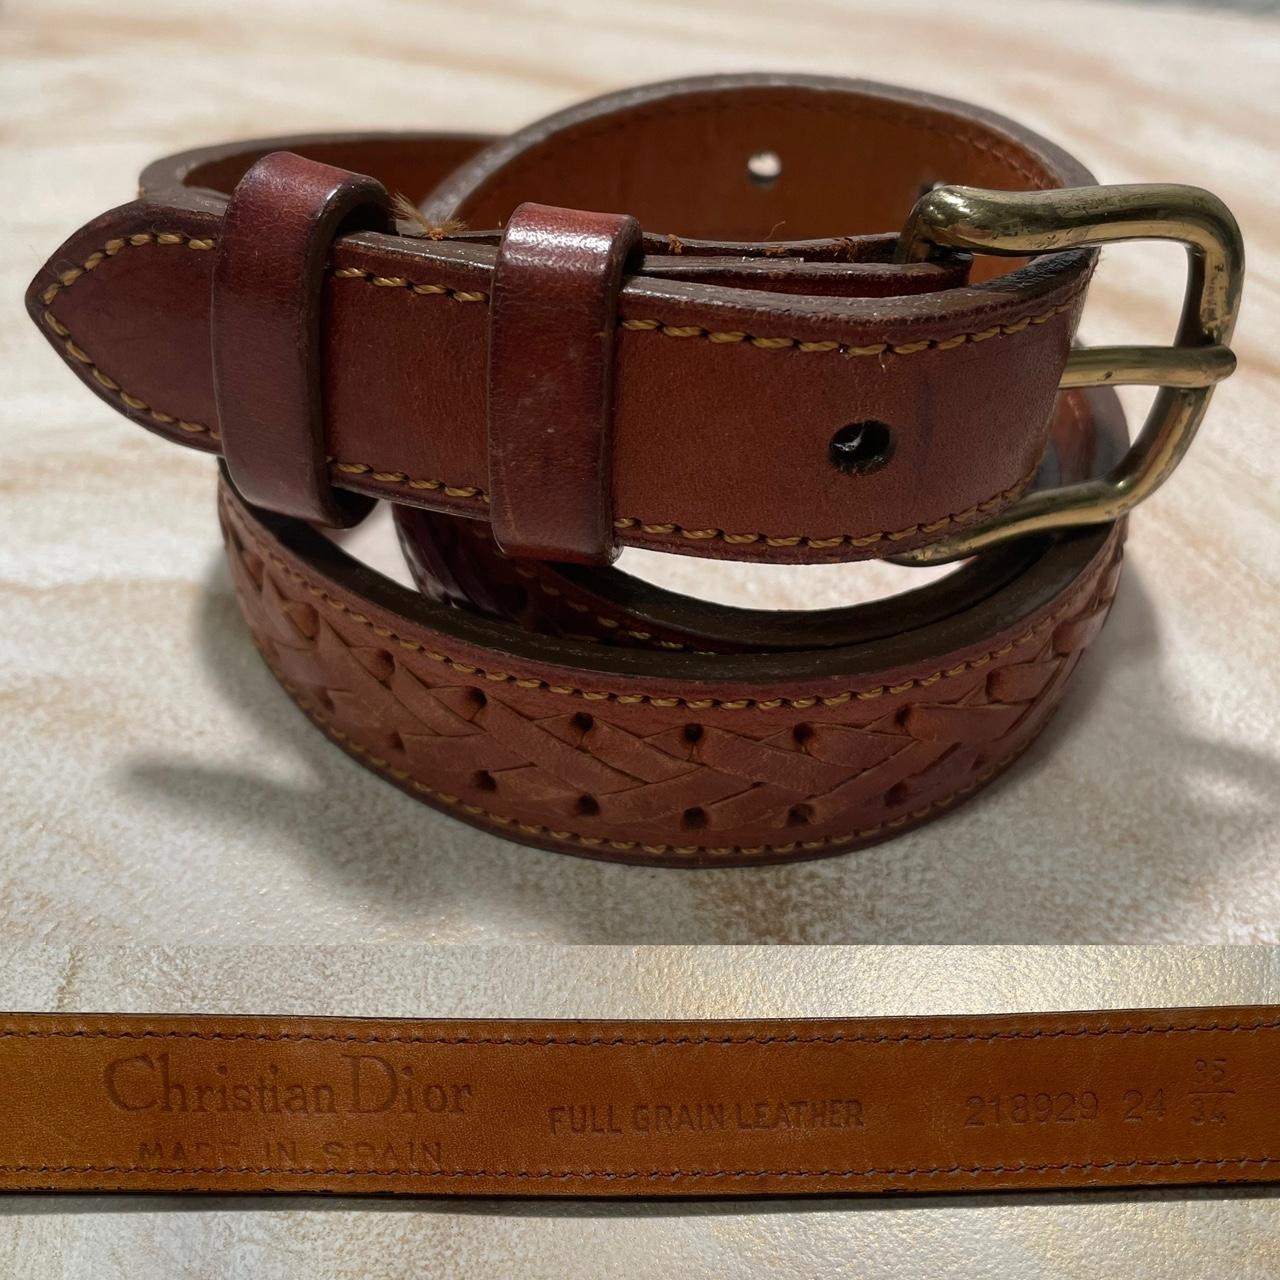 Christian Dior Men's Belt - Brown